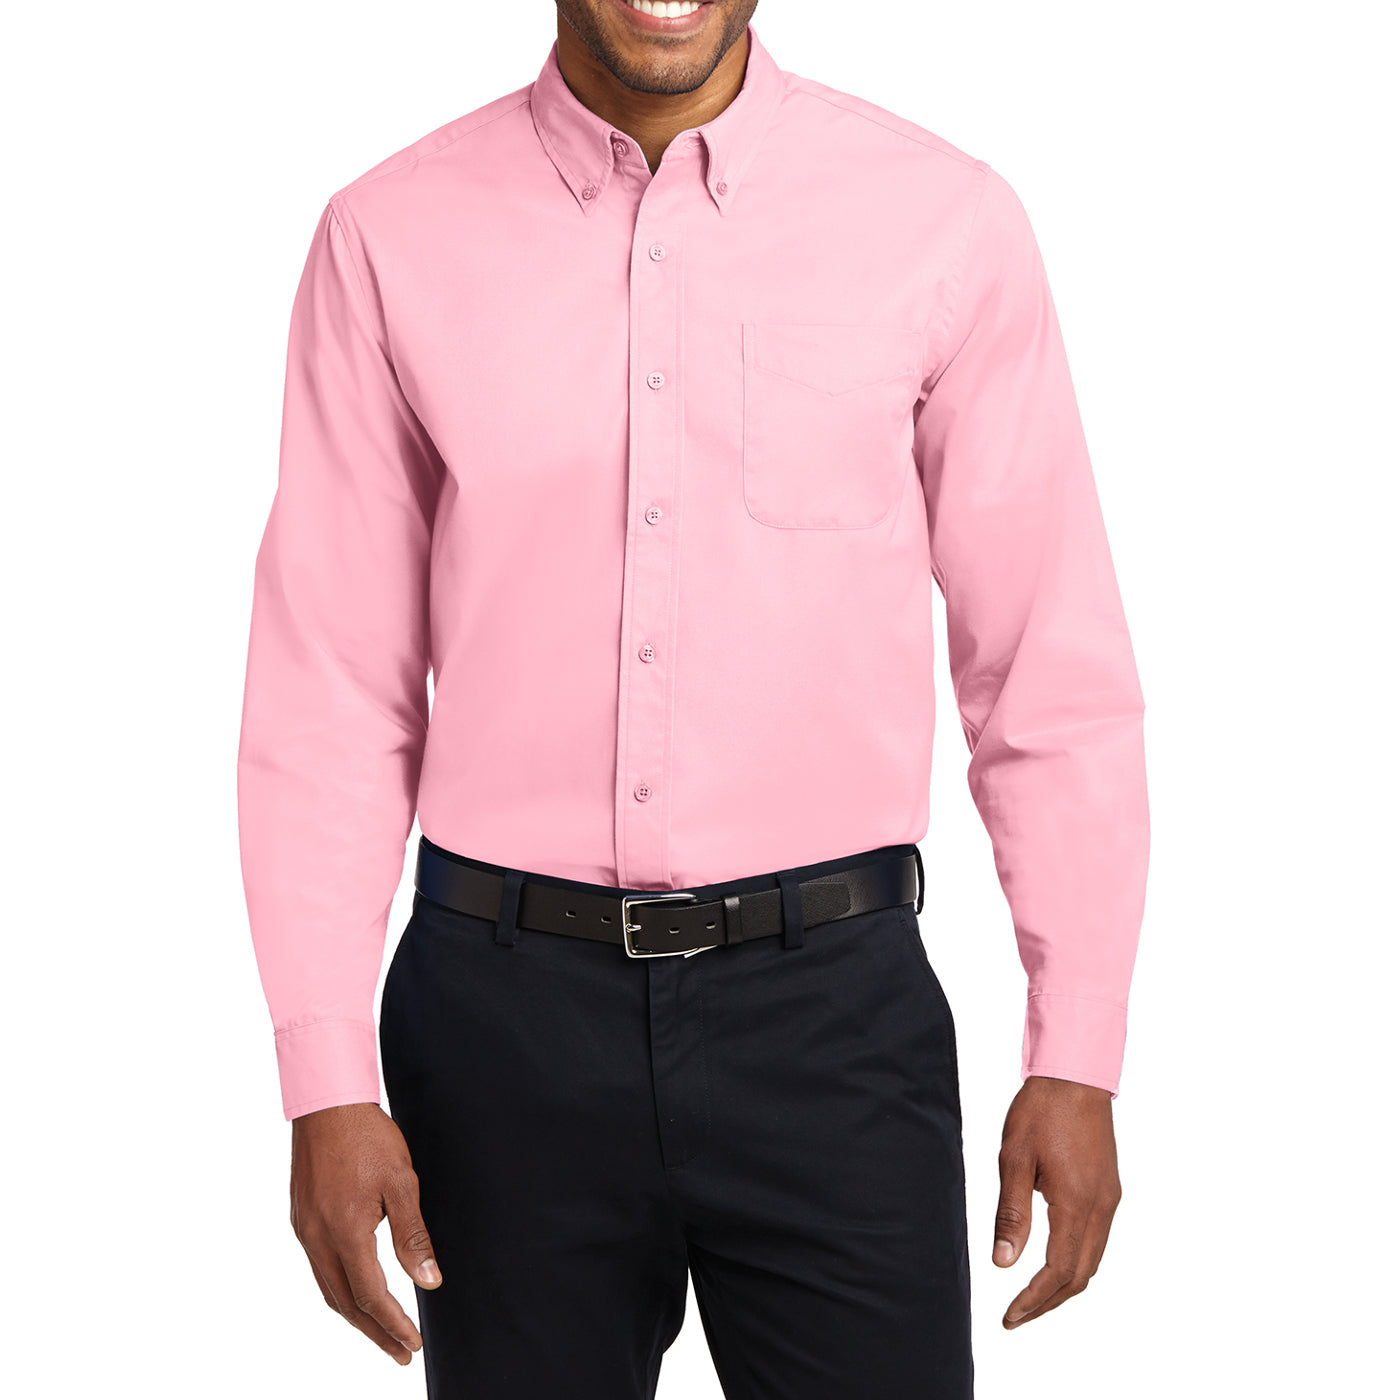 Men's Long Sleeve Easy Care Shirt - Light Pink - Front